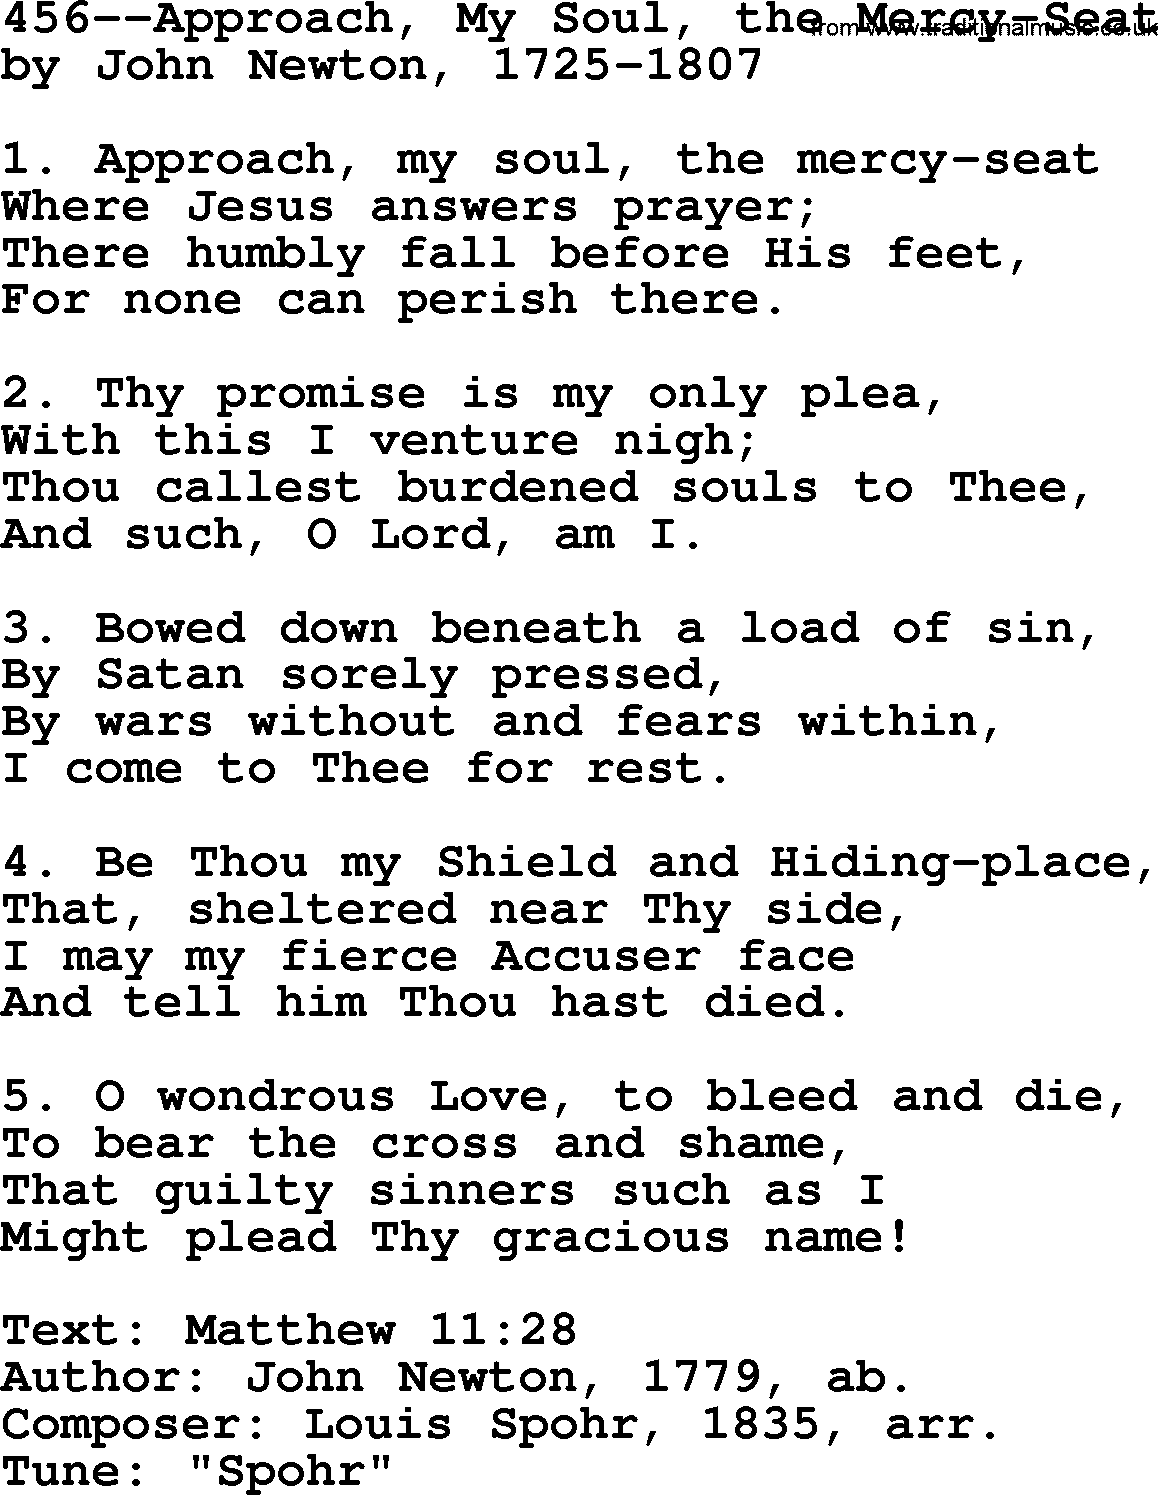 Lutheran Hymn: 456--Approach, My Soul, the Mercy-Seat.txt lyrics with PDF